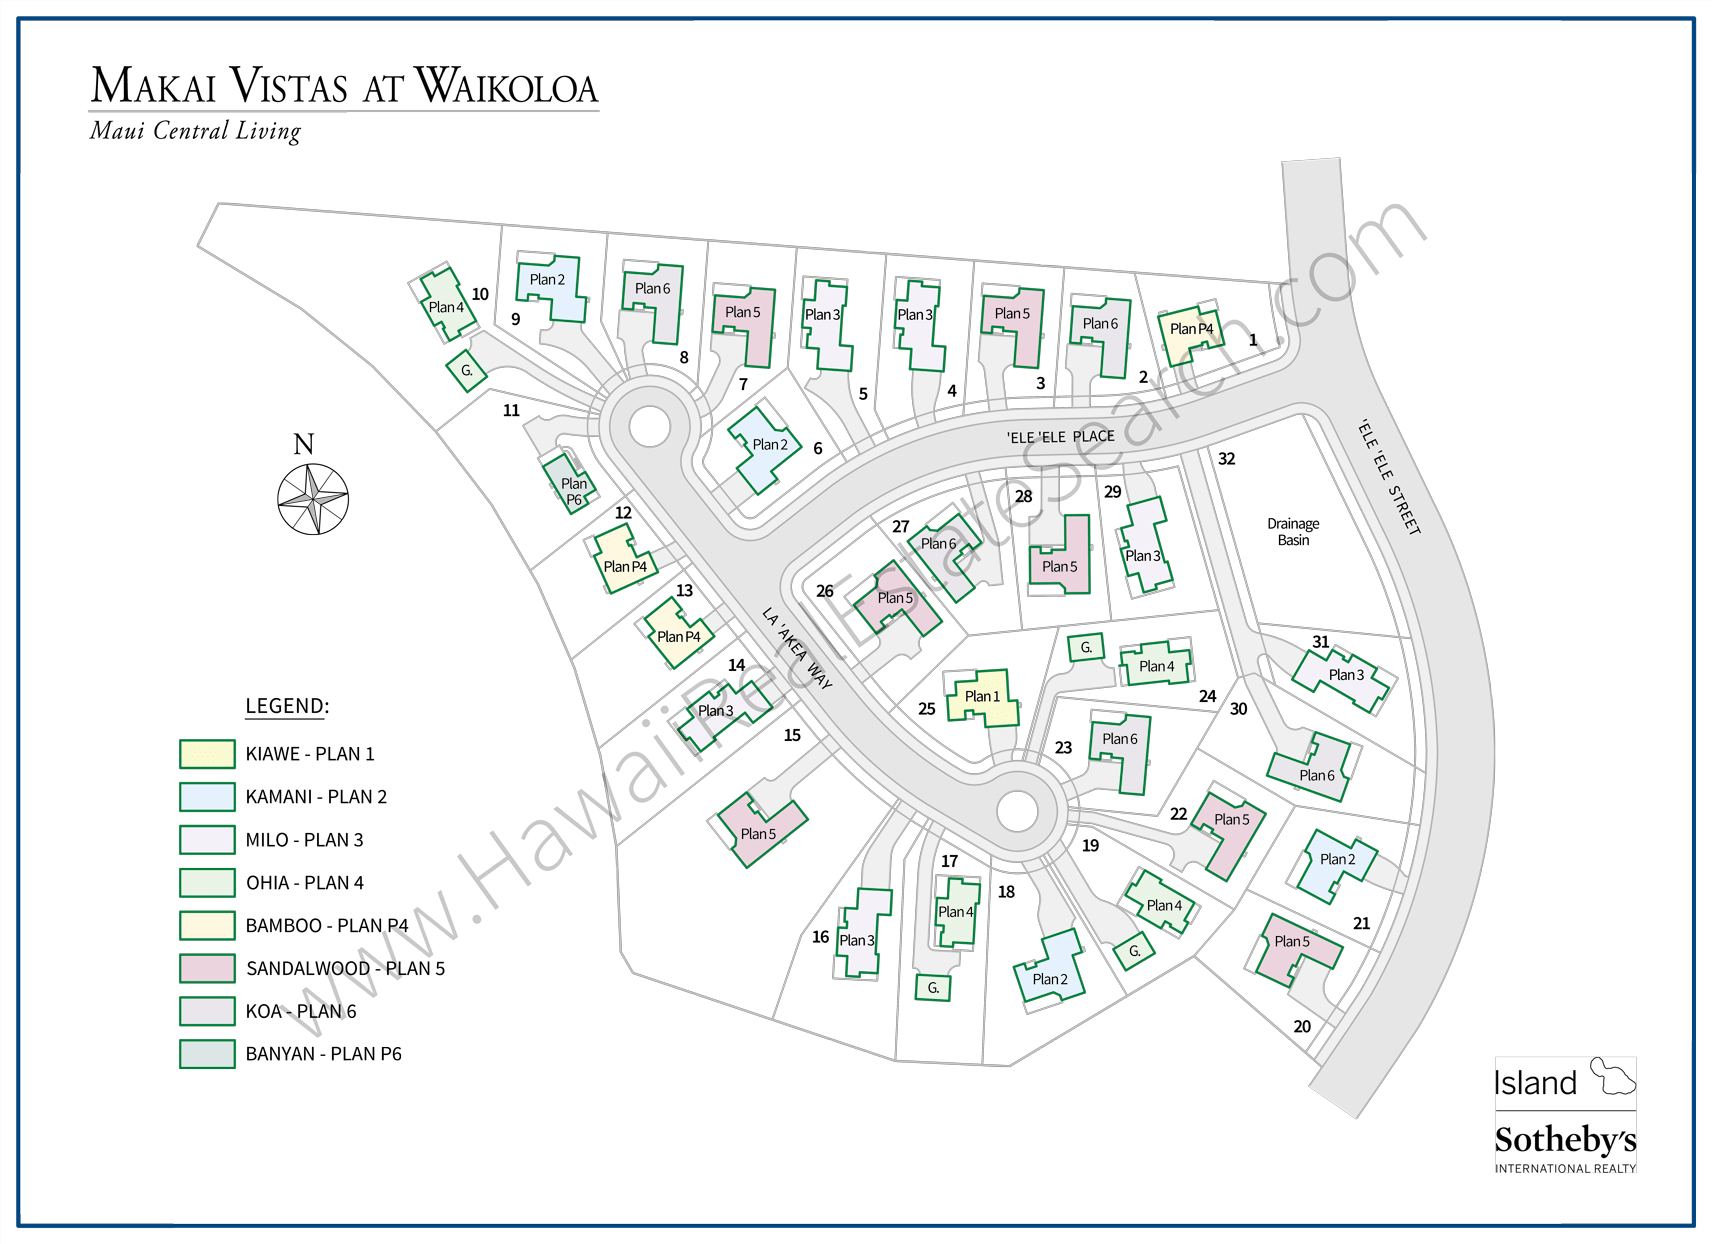 Makai Vistas at Waikoloa Map